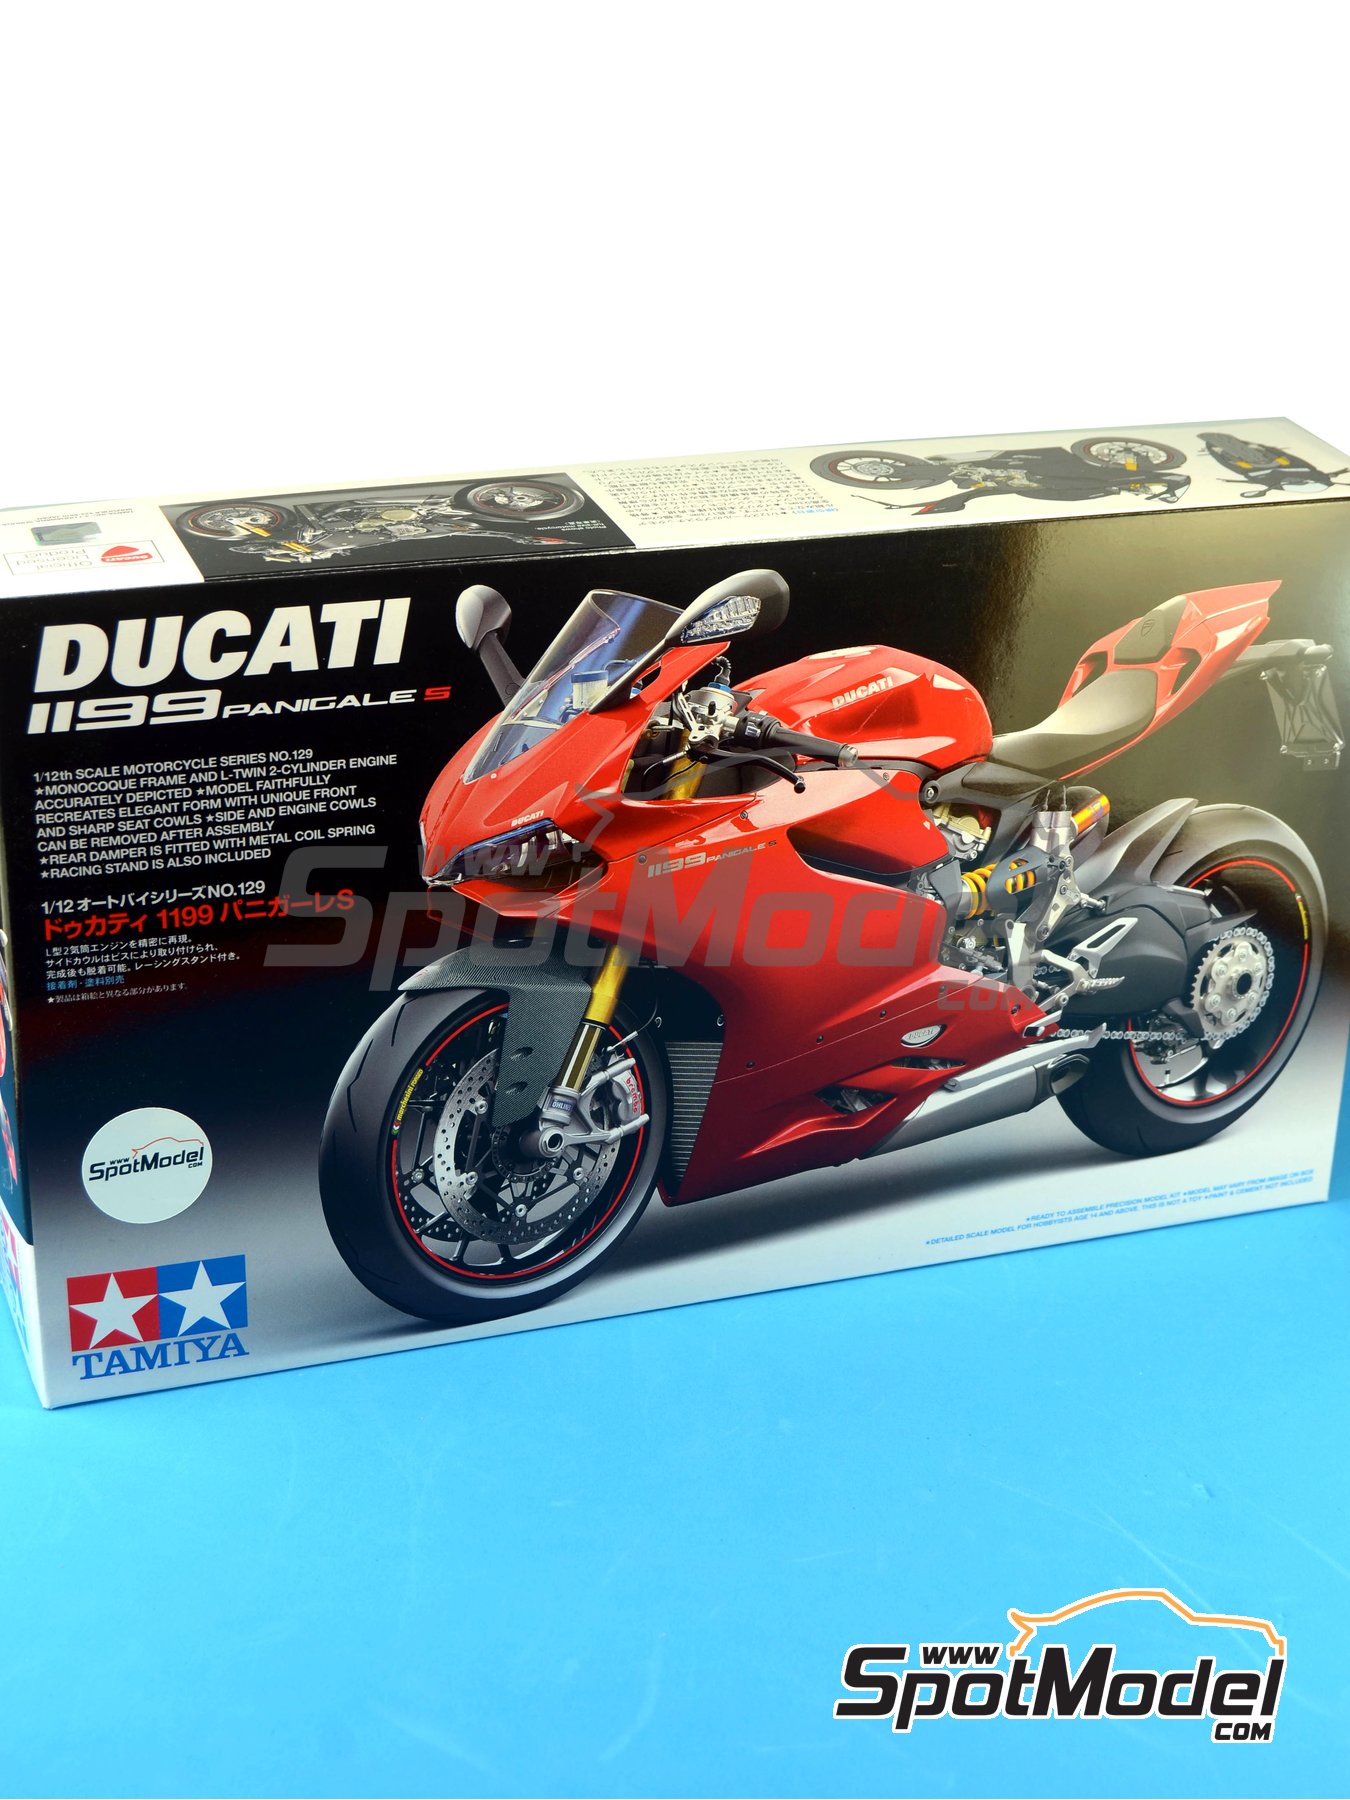 Tamiya 1/12 Ducati 1199 Panigale S Motorcycle Tam14129 for sale online 